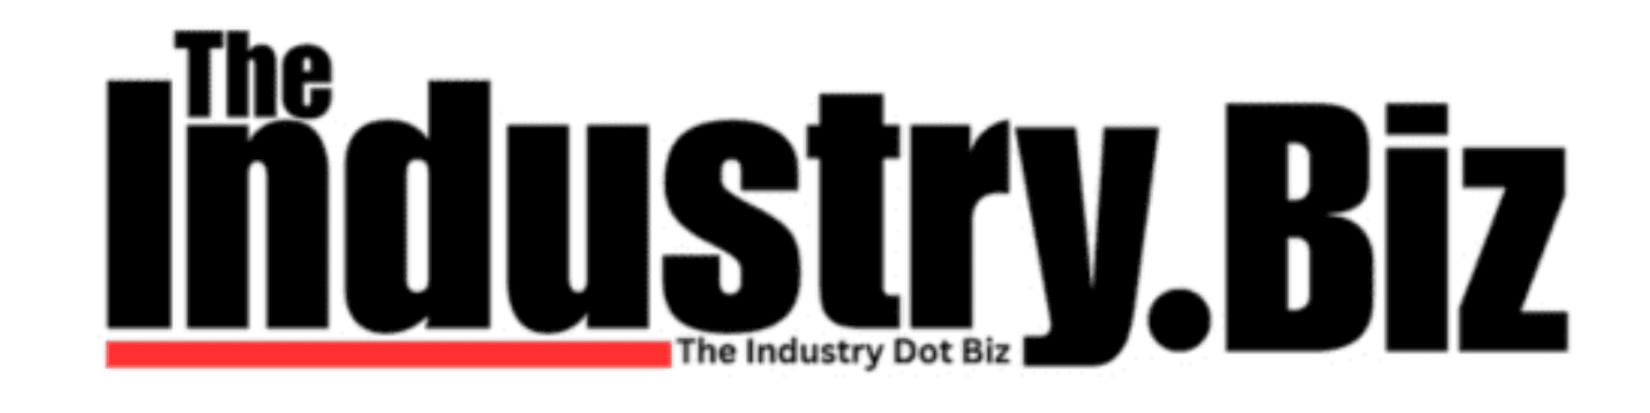 The Industry Dot Biz
